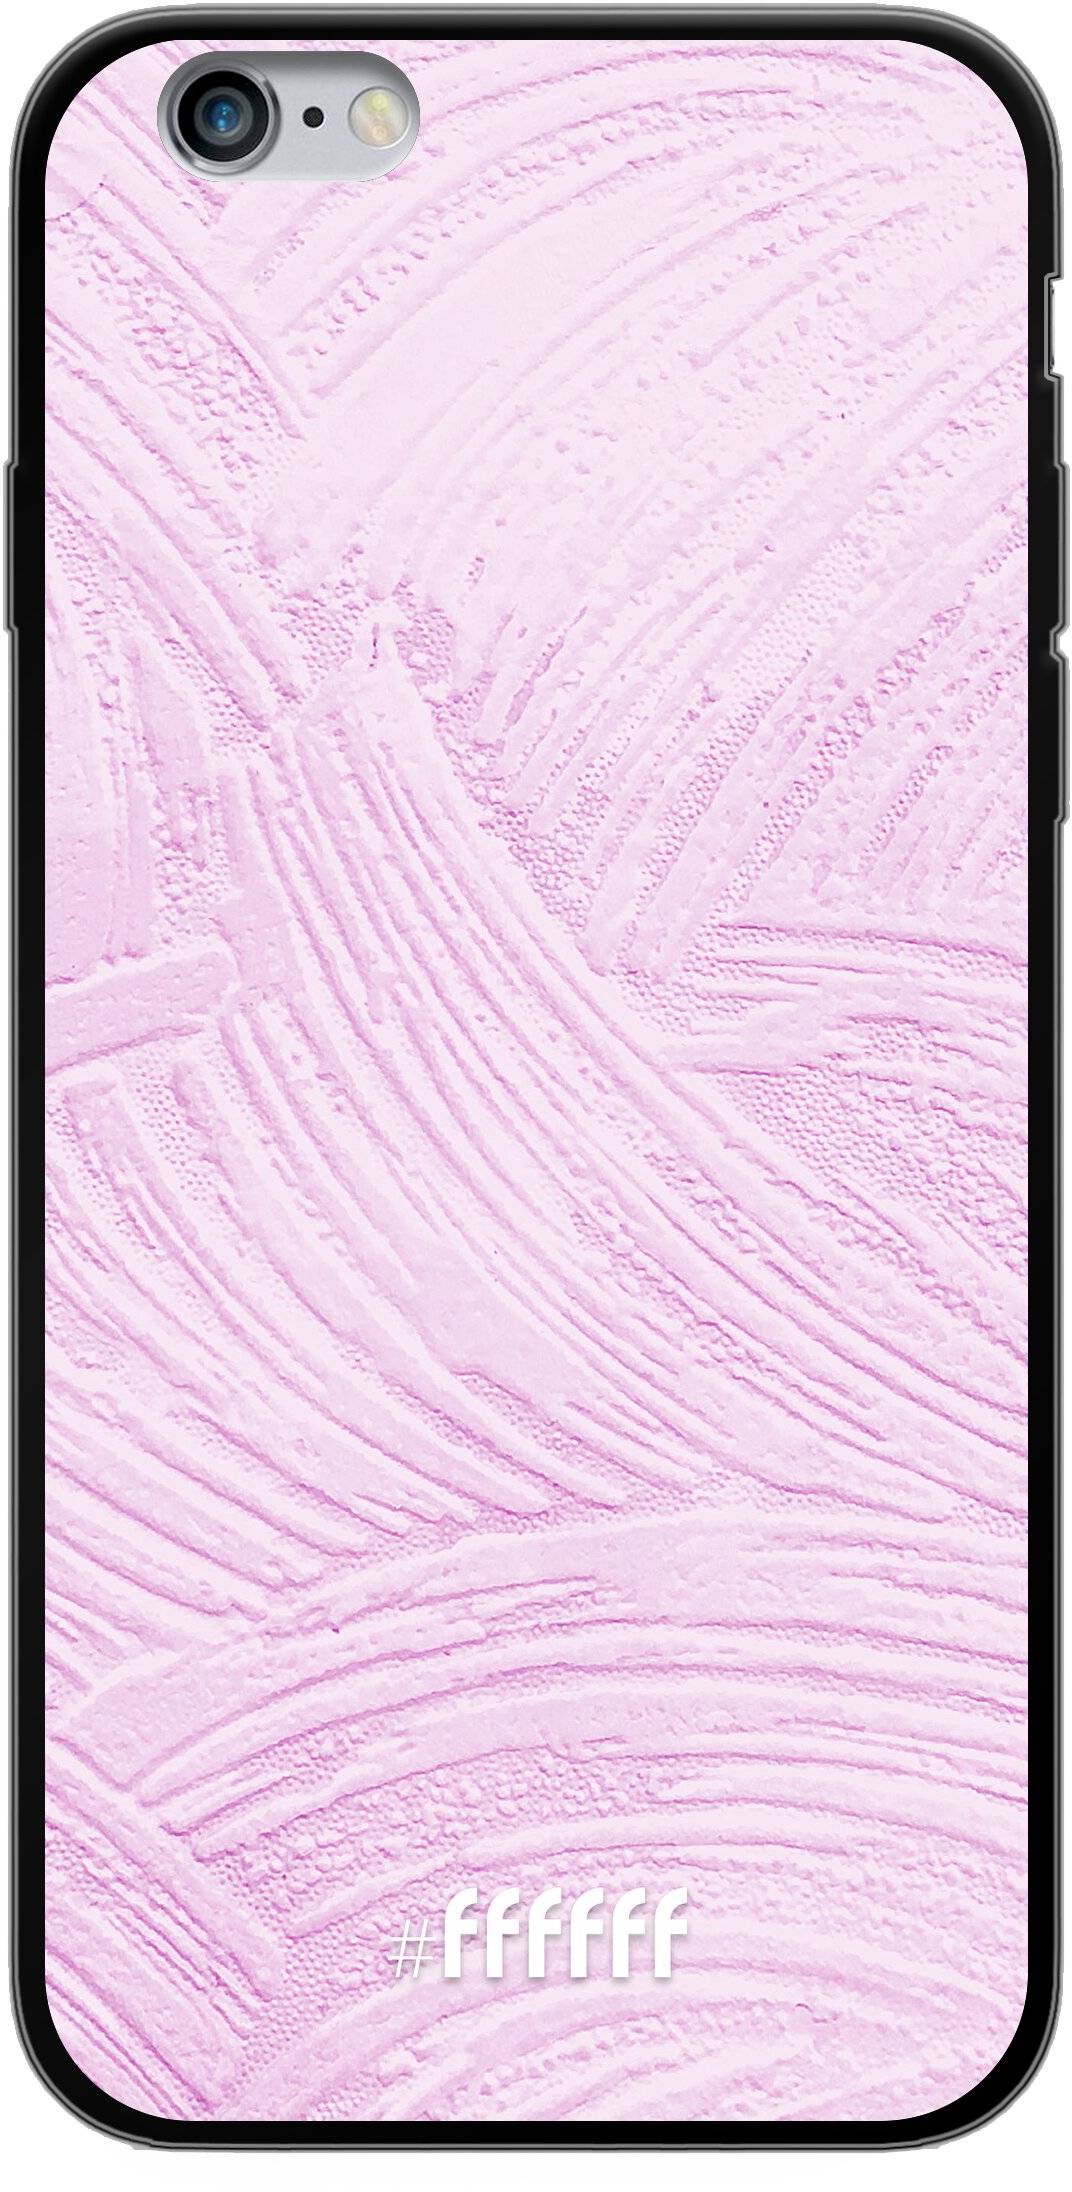 Pink Slink iPhone 6s